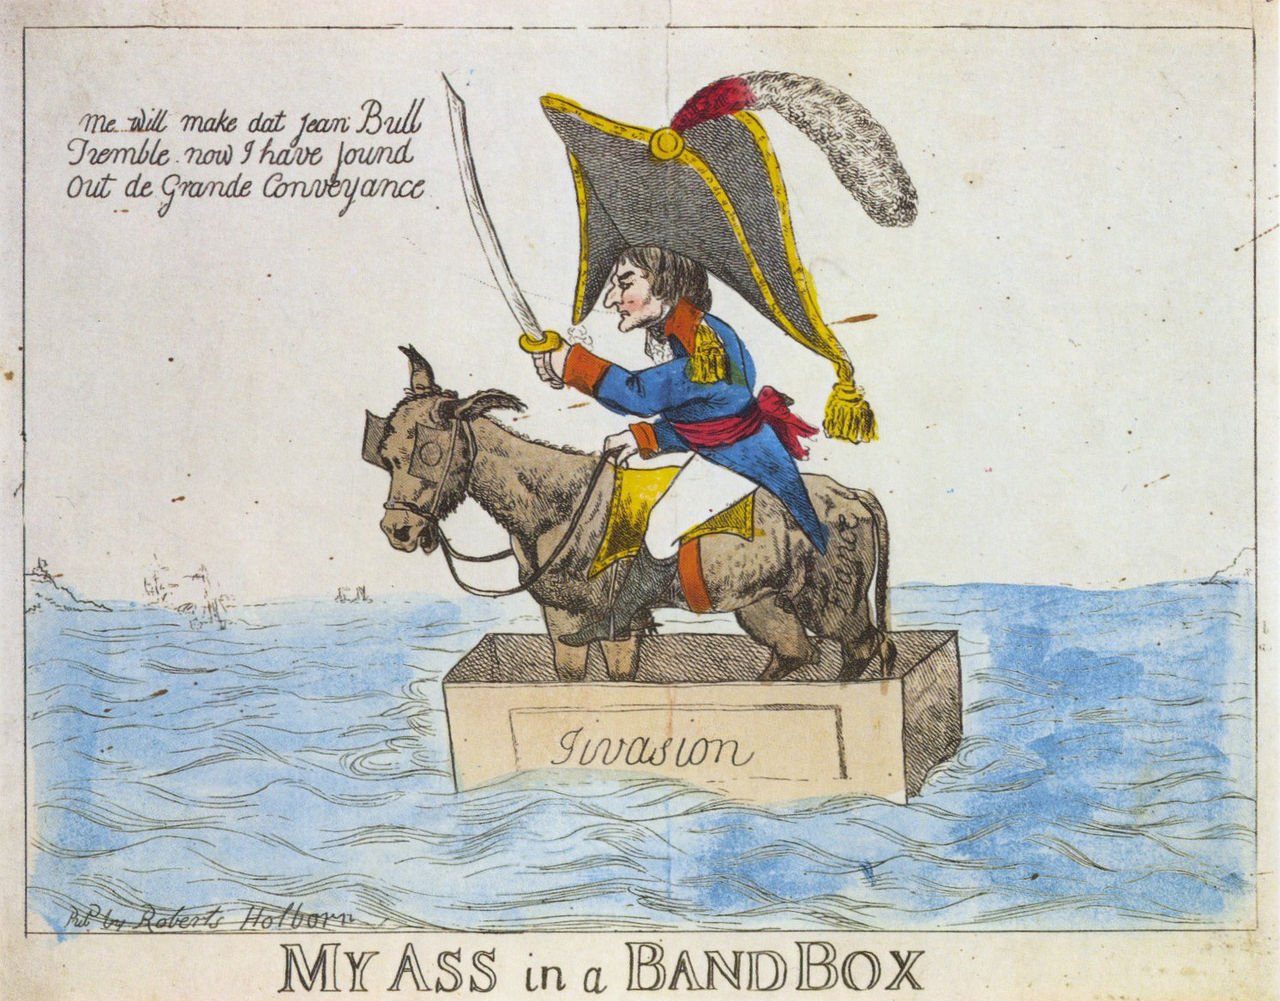 "My ass in a bandbox". British cartoon mocking Napoléon's invasion plans against England